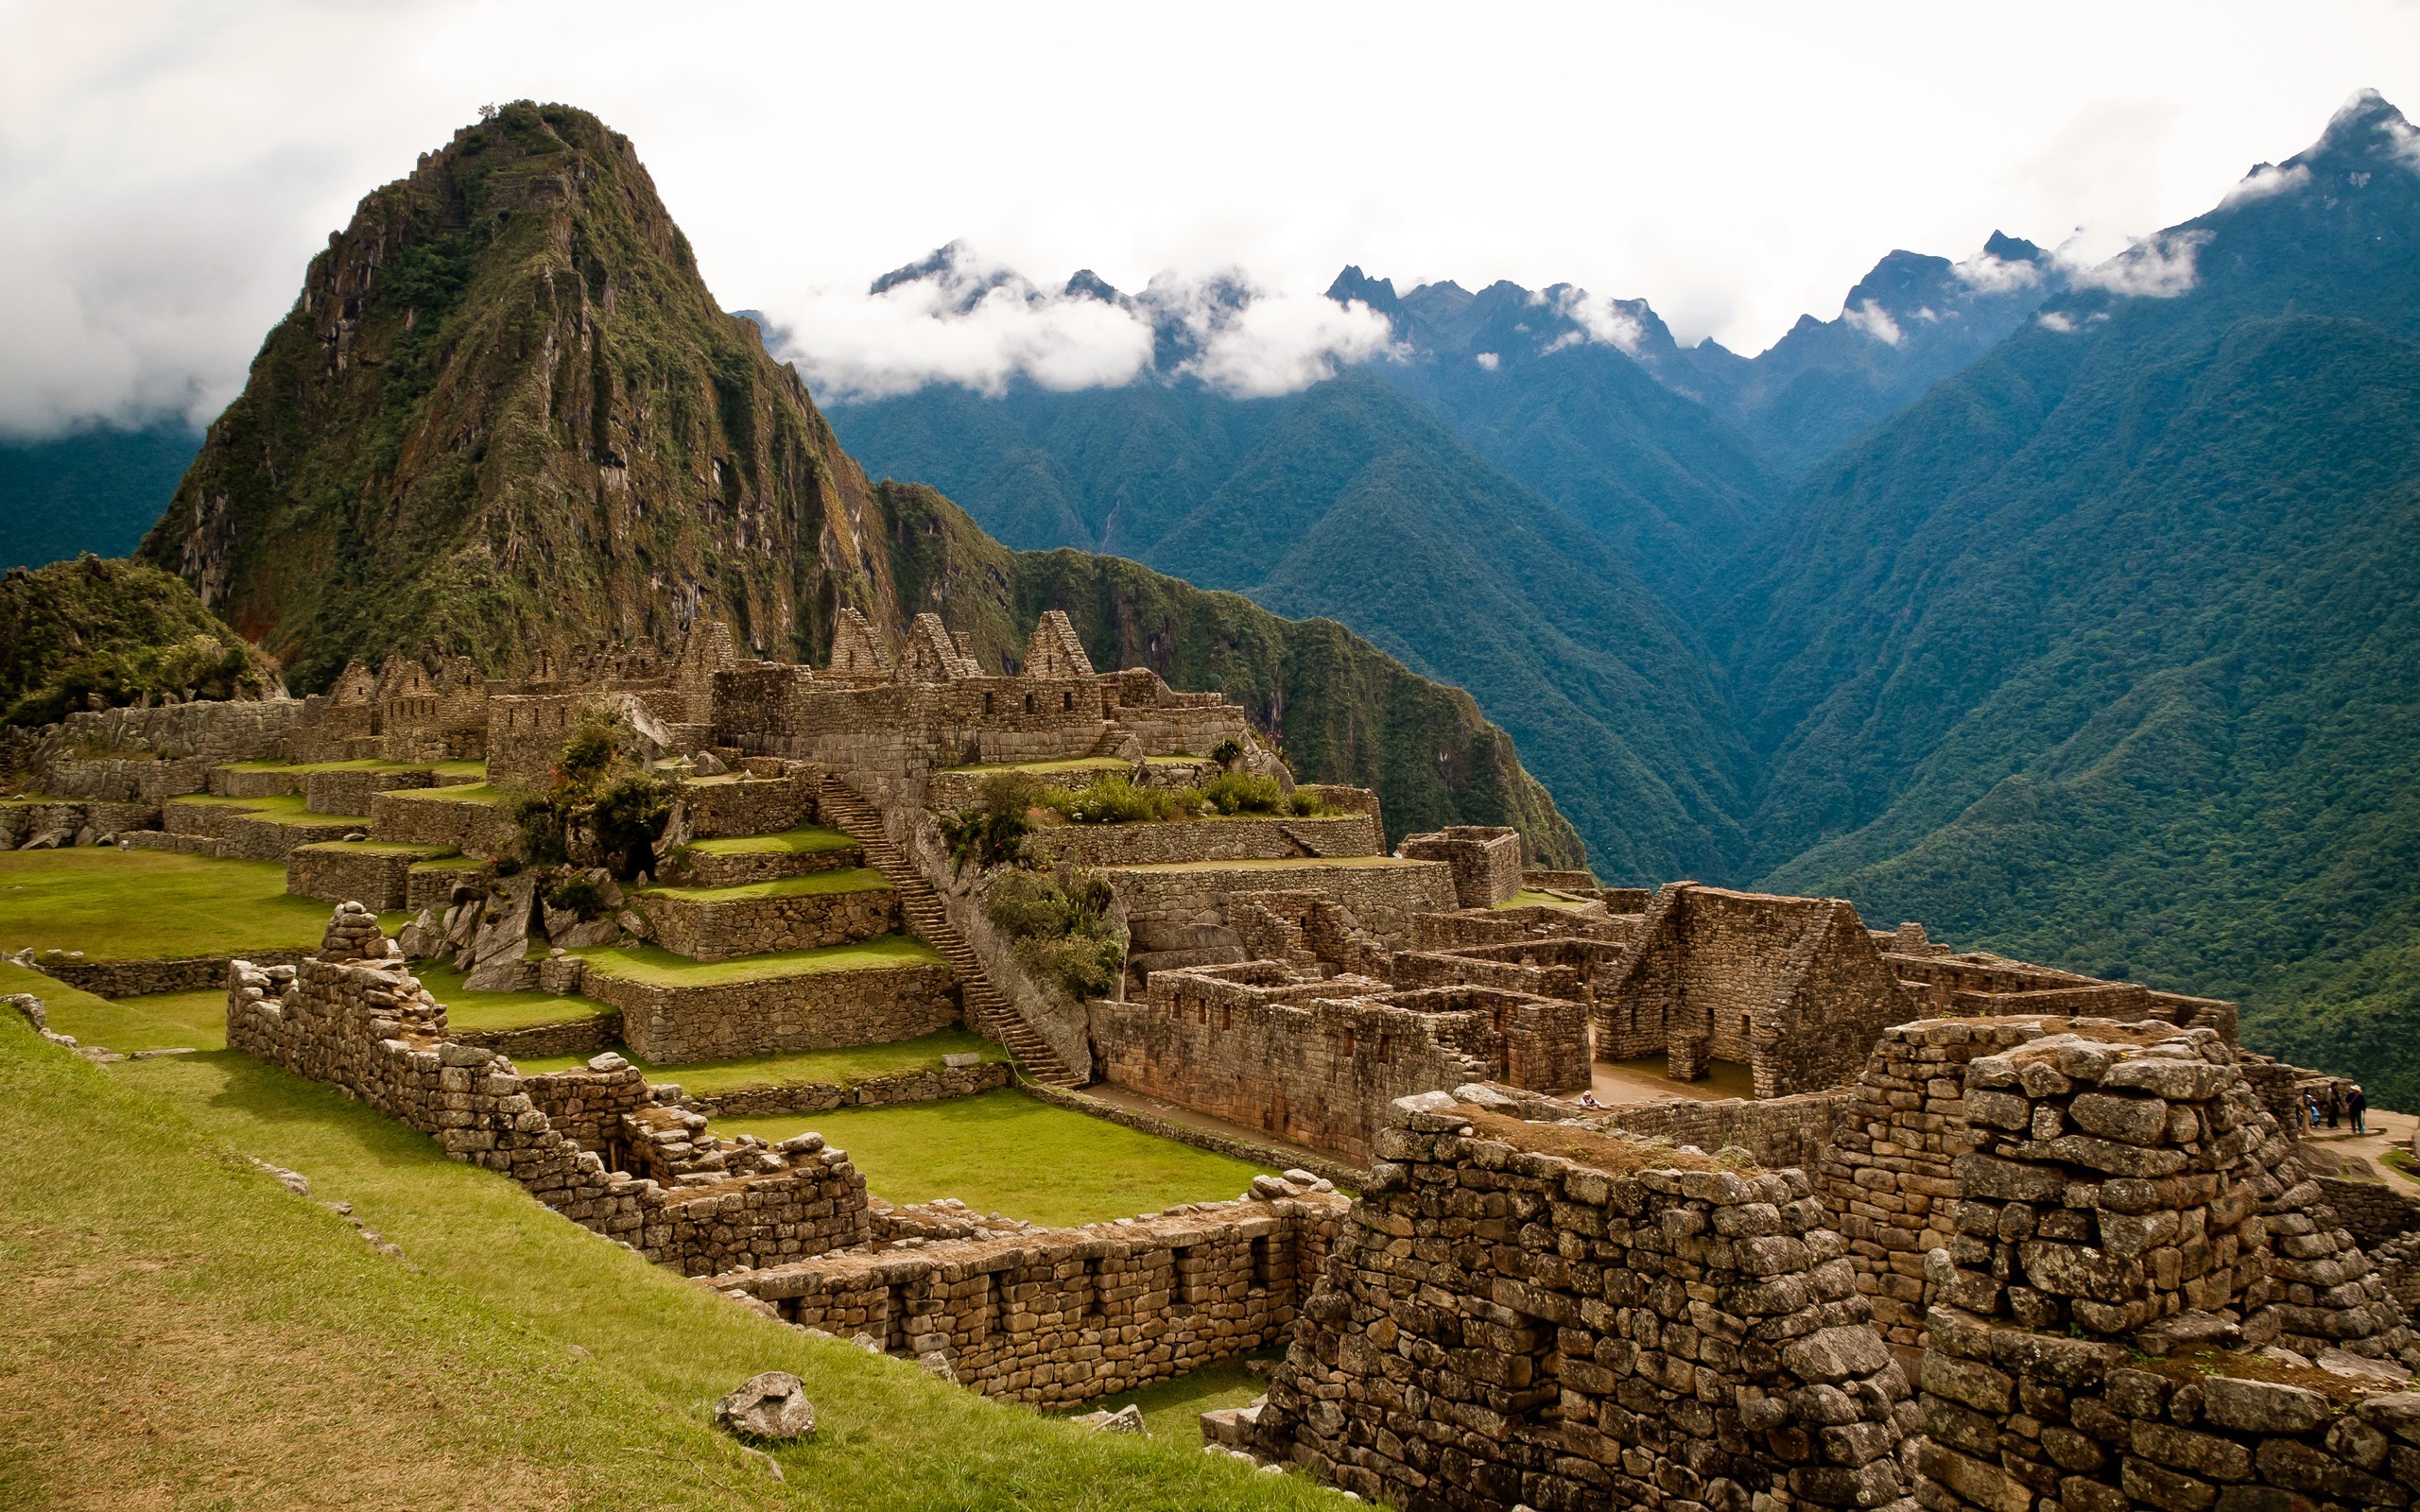 General 2560x1600 landscape ruins mountains Inca Peru South America Machu Picchu ancient history World Heritage Site landmark